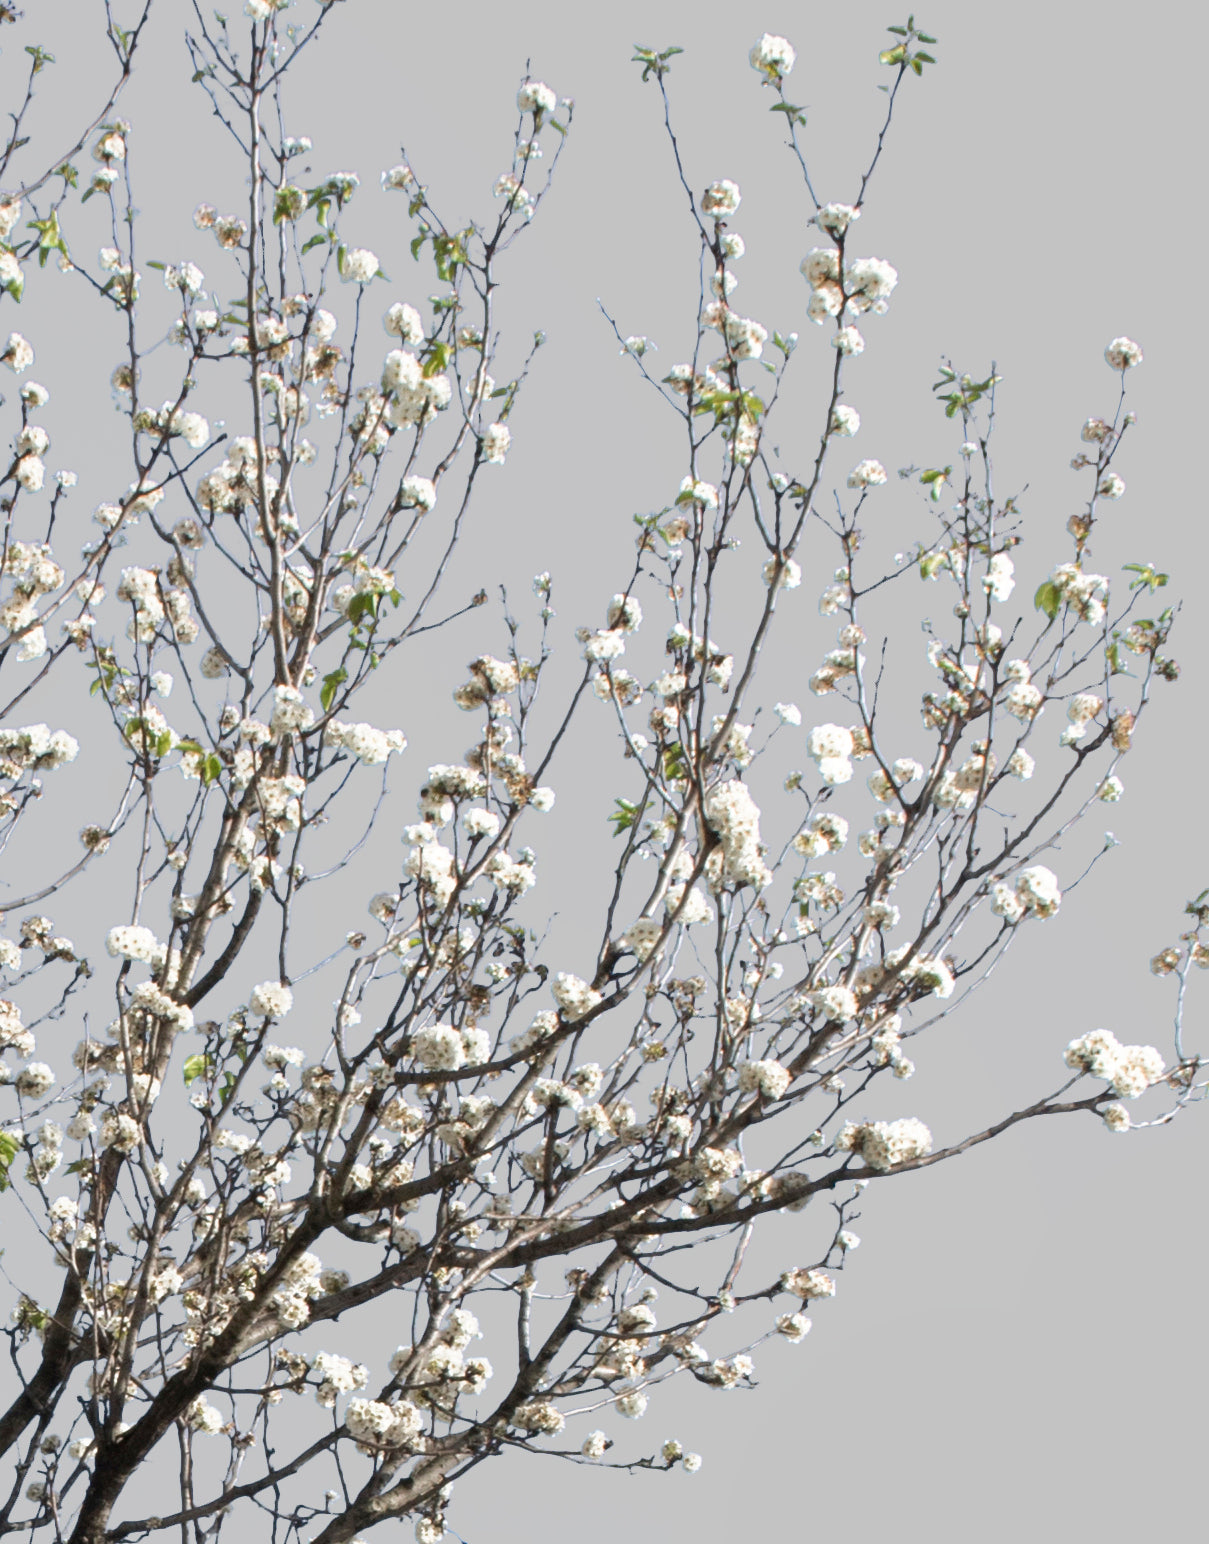 Prunus cerasifera Springtime Flowers II - cutout trees